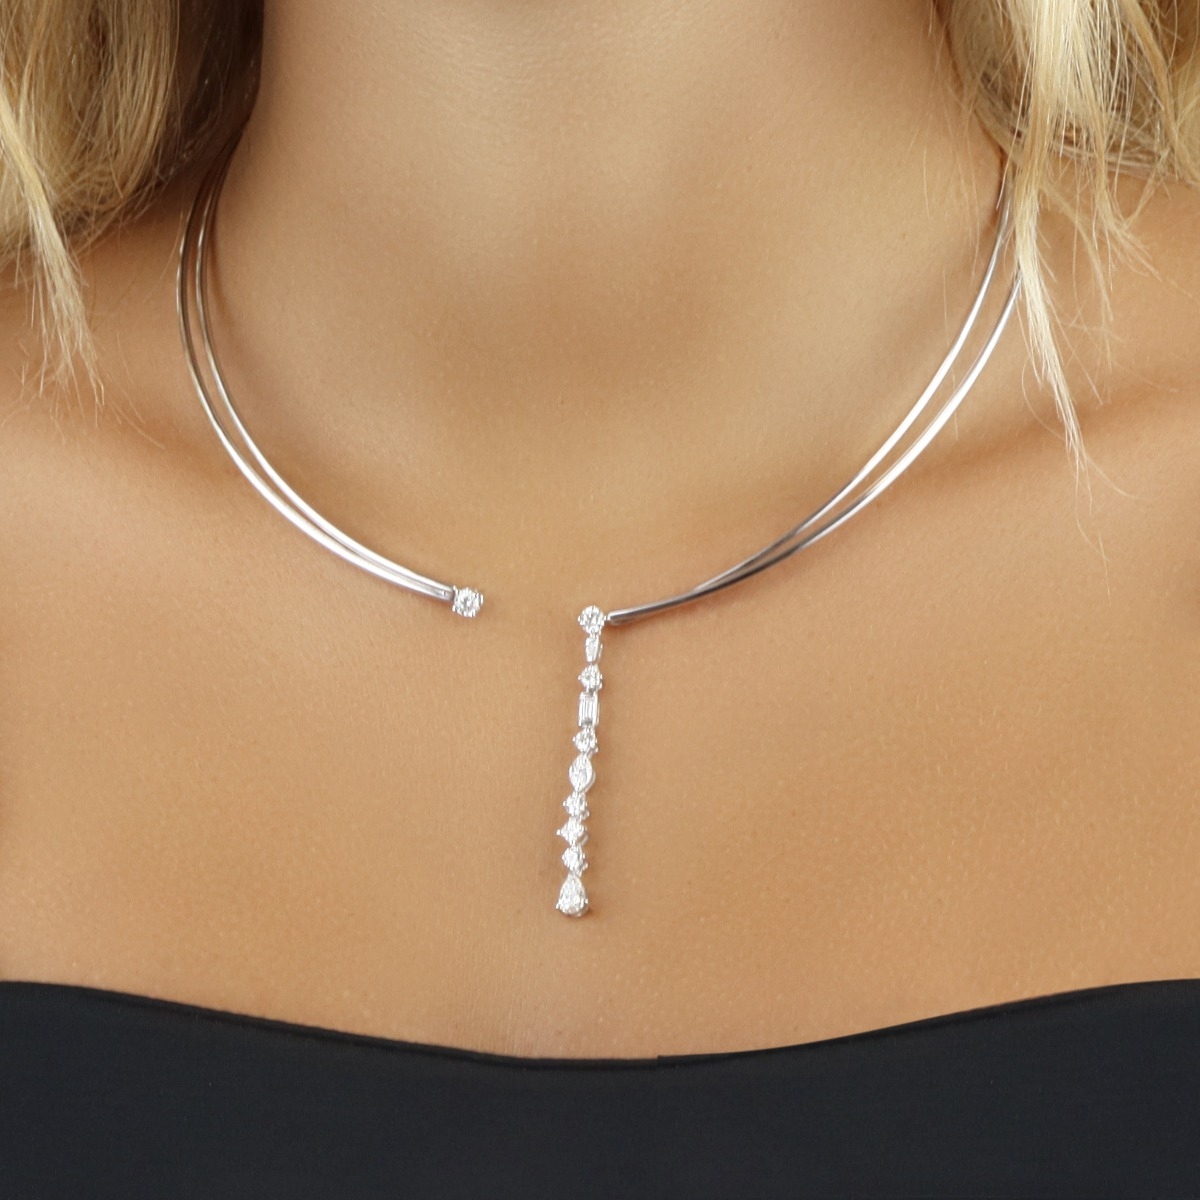 Adjustable Open Collar Necklace with Diamond Pendant